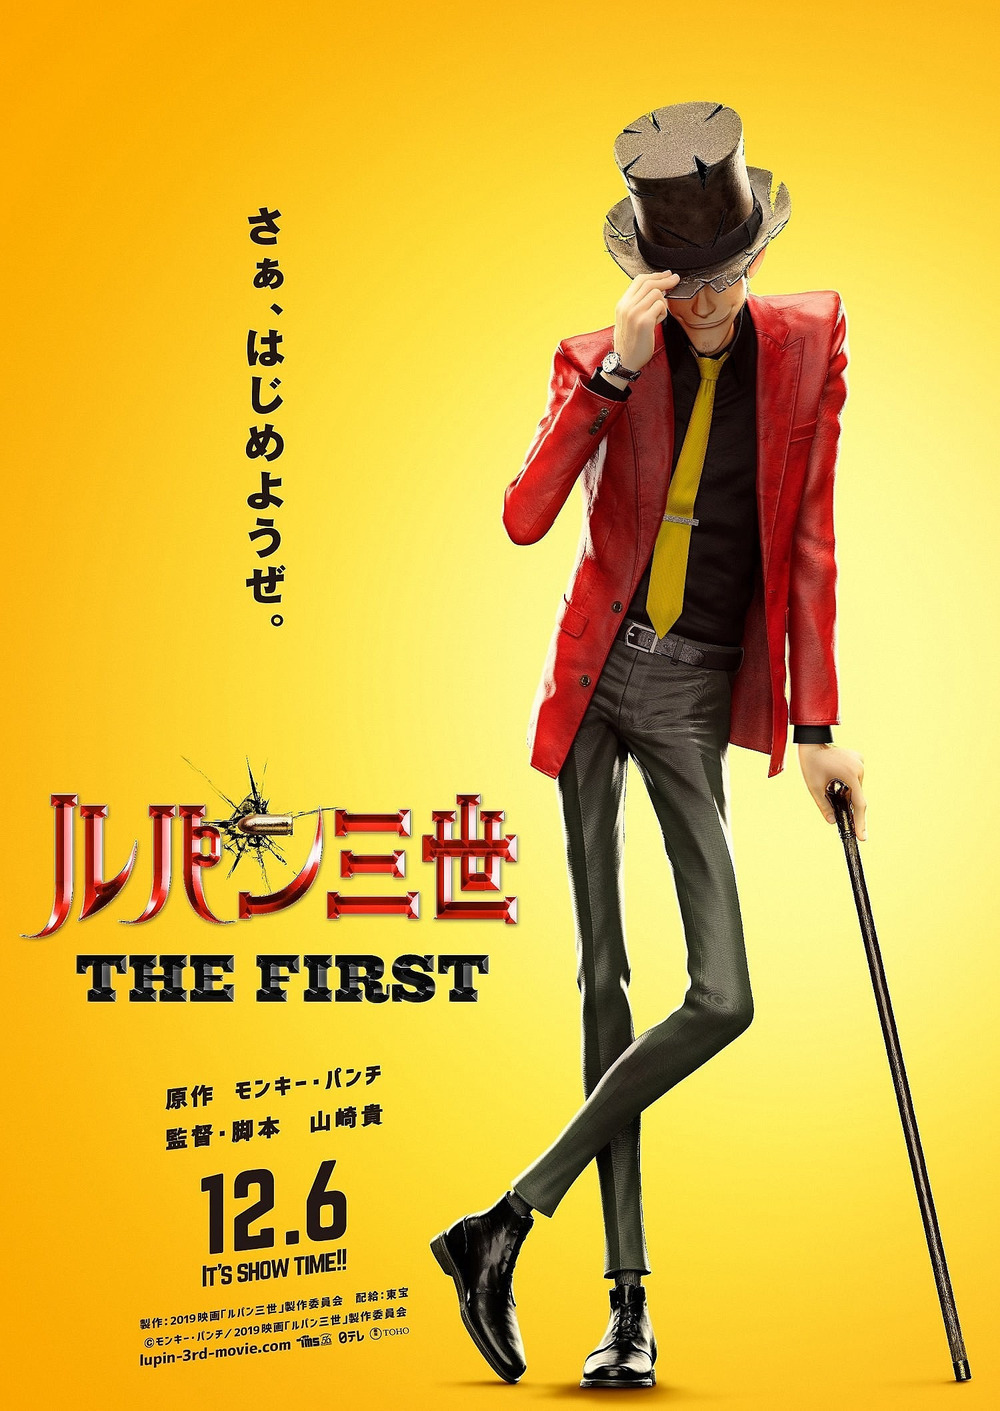 Lupin III: The First DVD Release Date | Redbox, Netflix, iTunes, Amazon